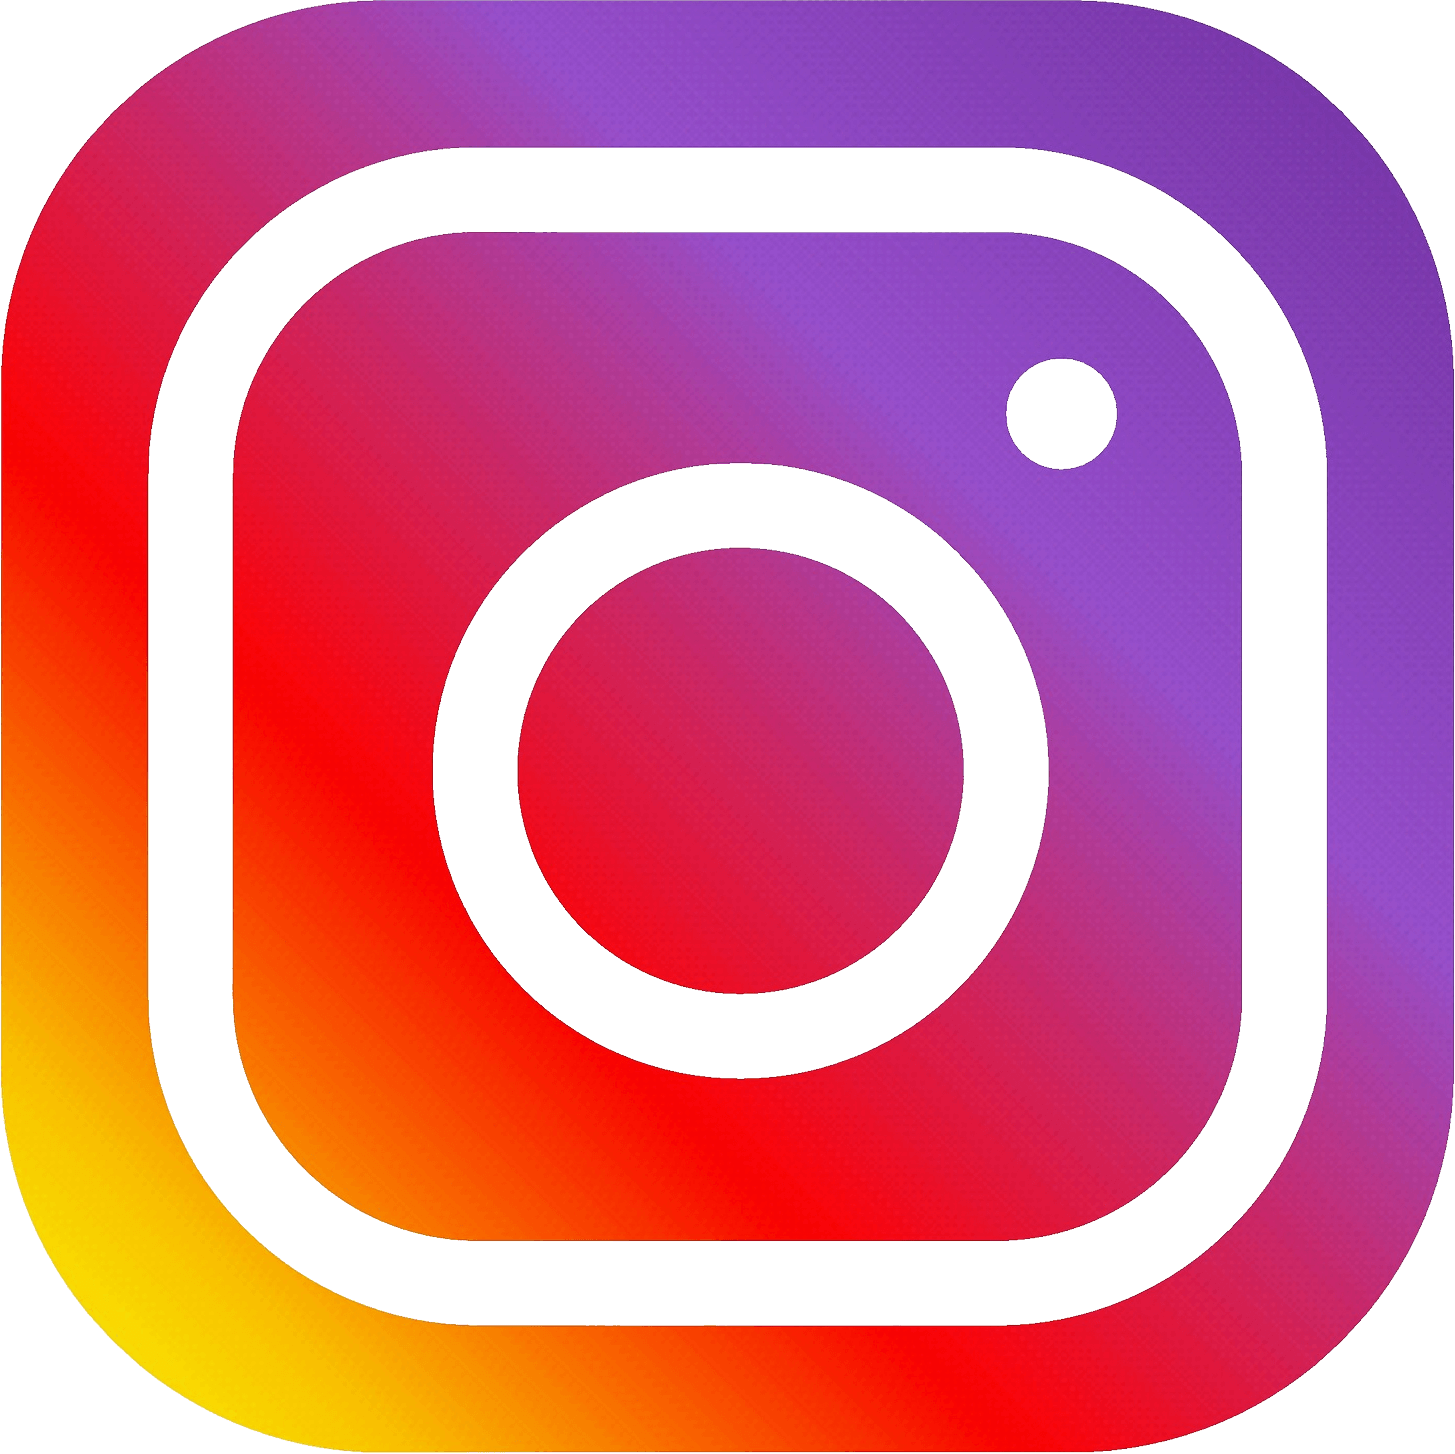 Instagram content production